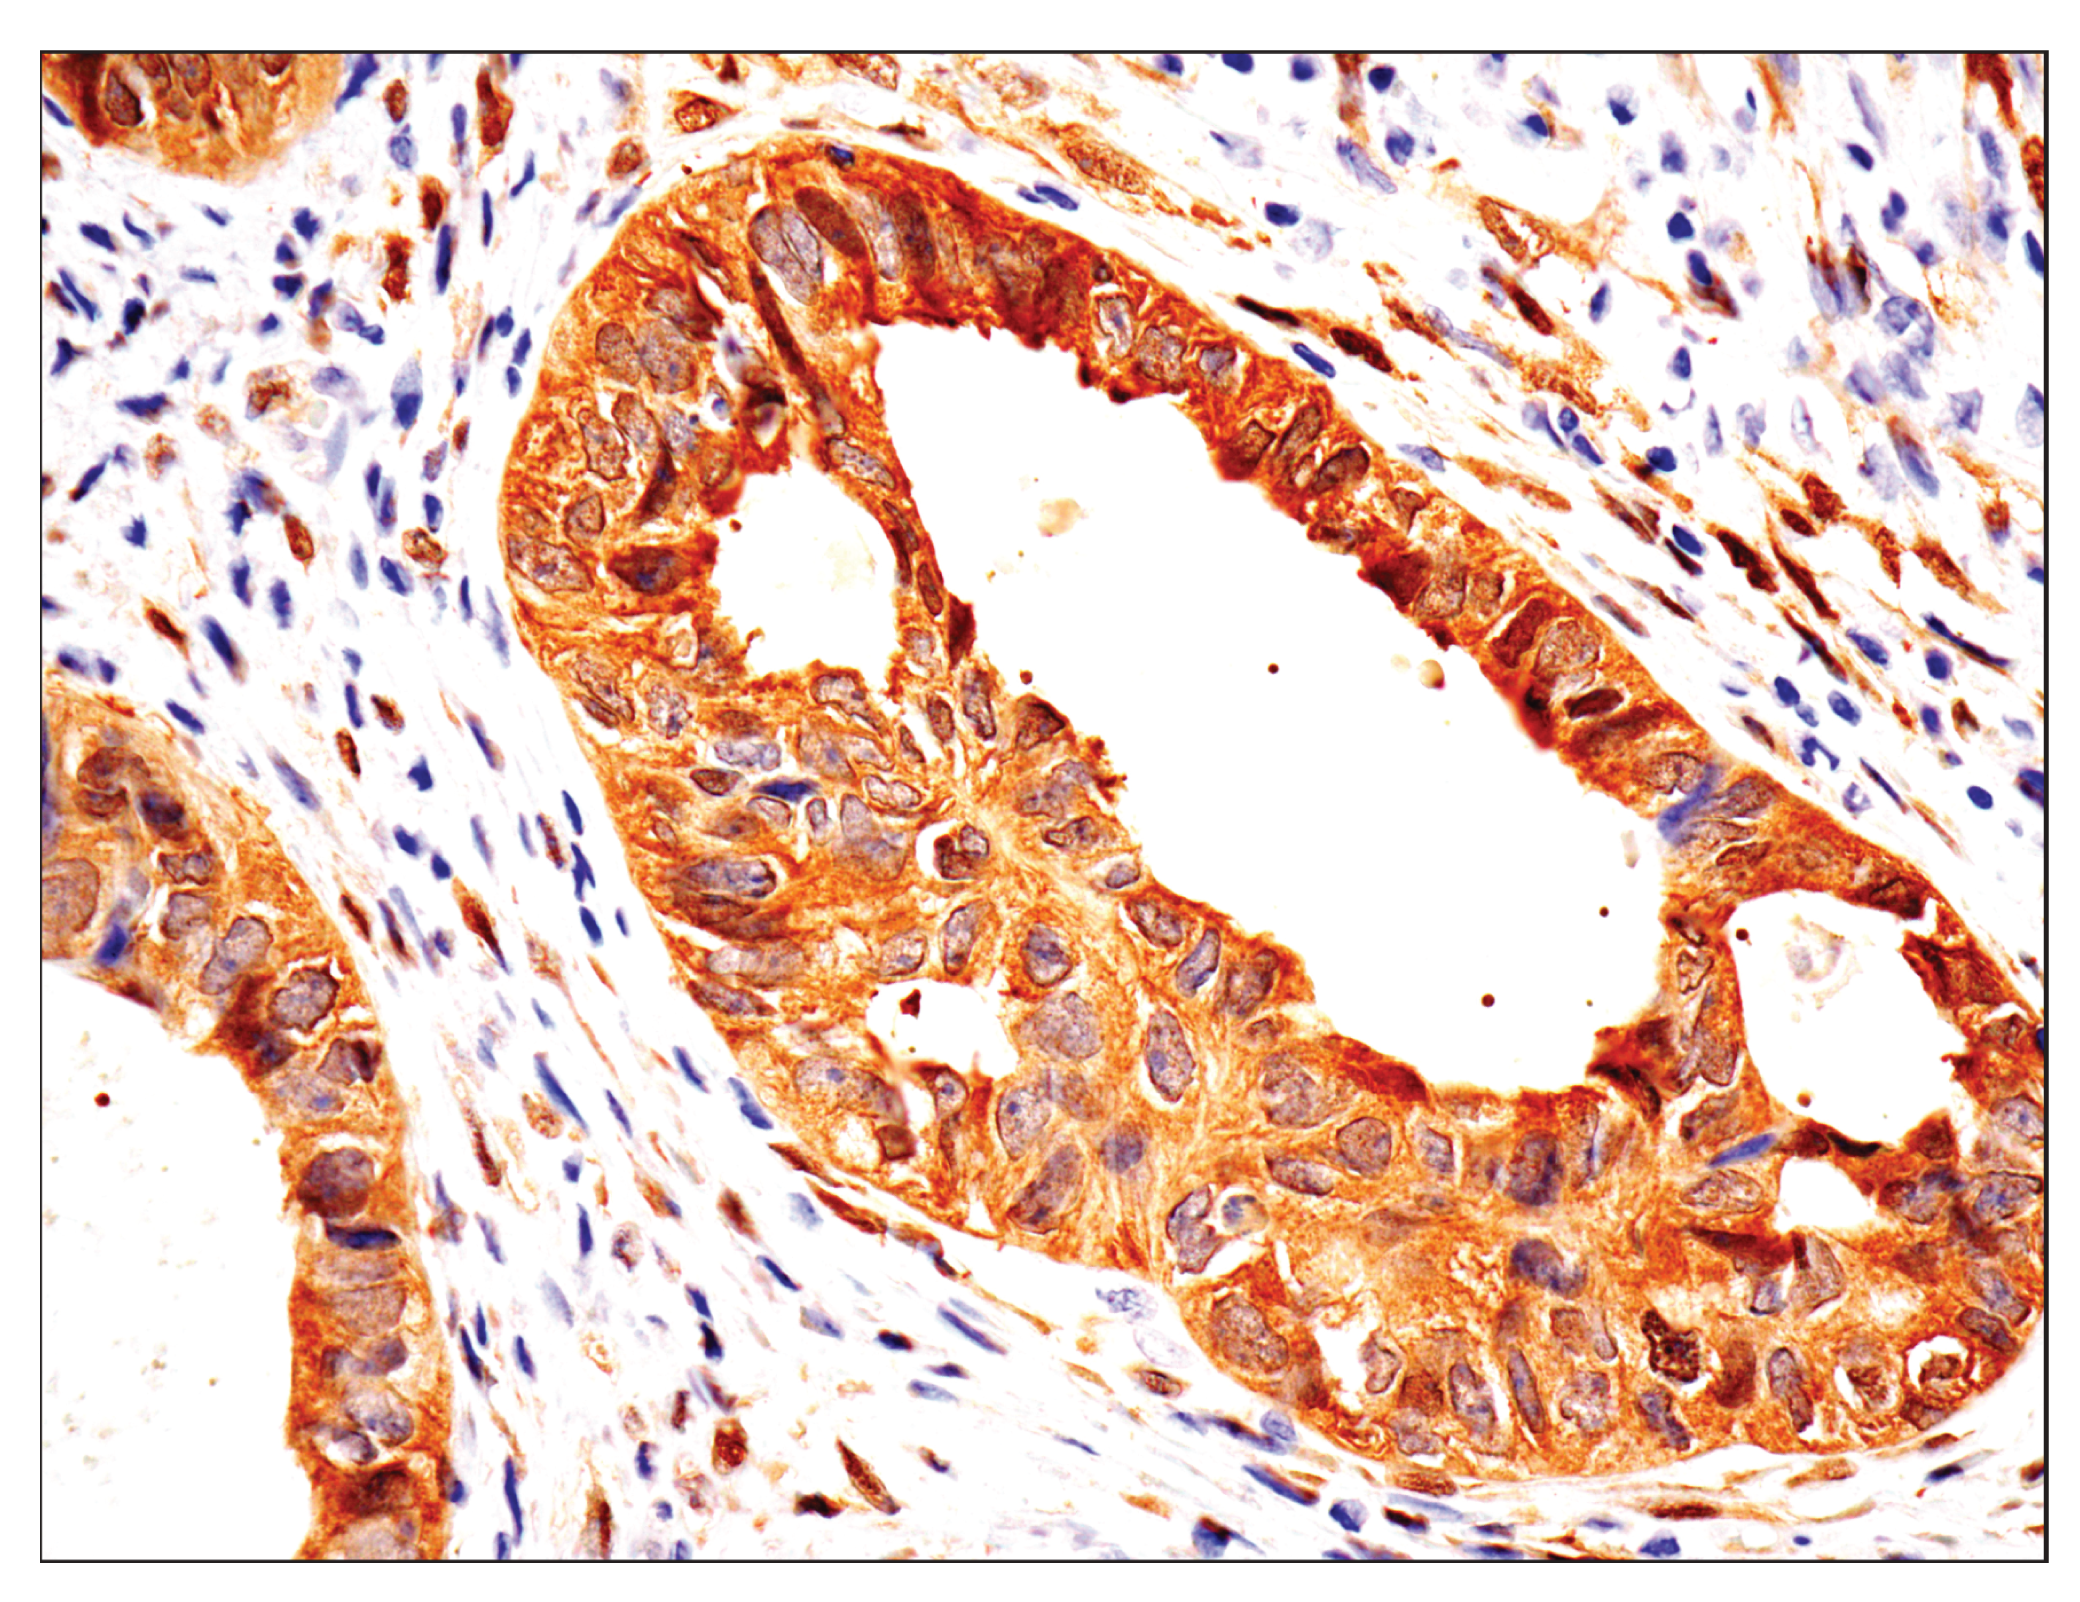  Image 48: Small Cell Lung Cancer Biomarker Antibody Sampler Kit